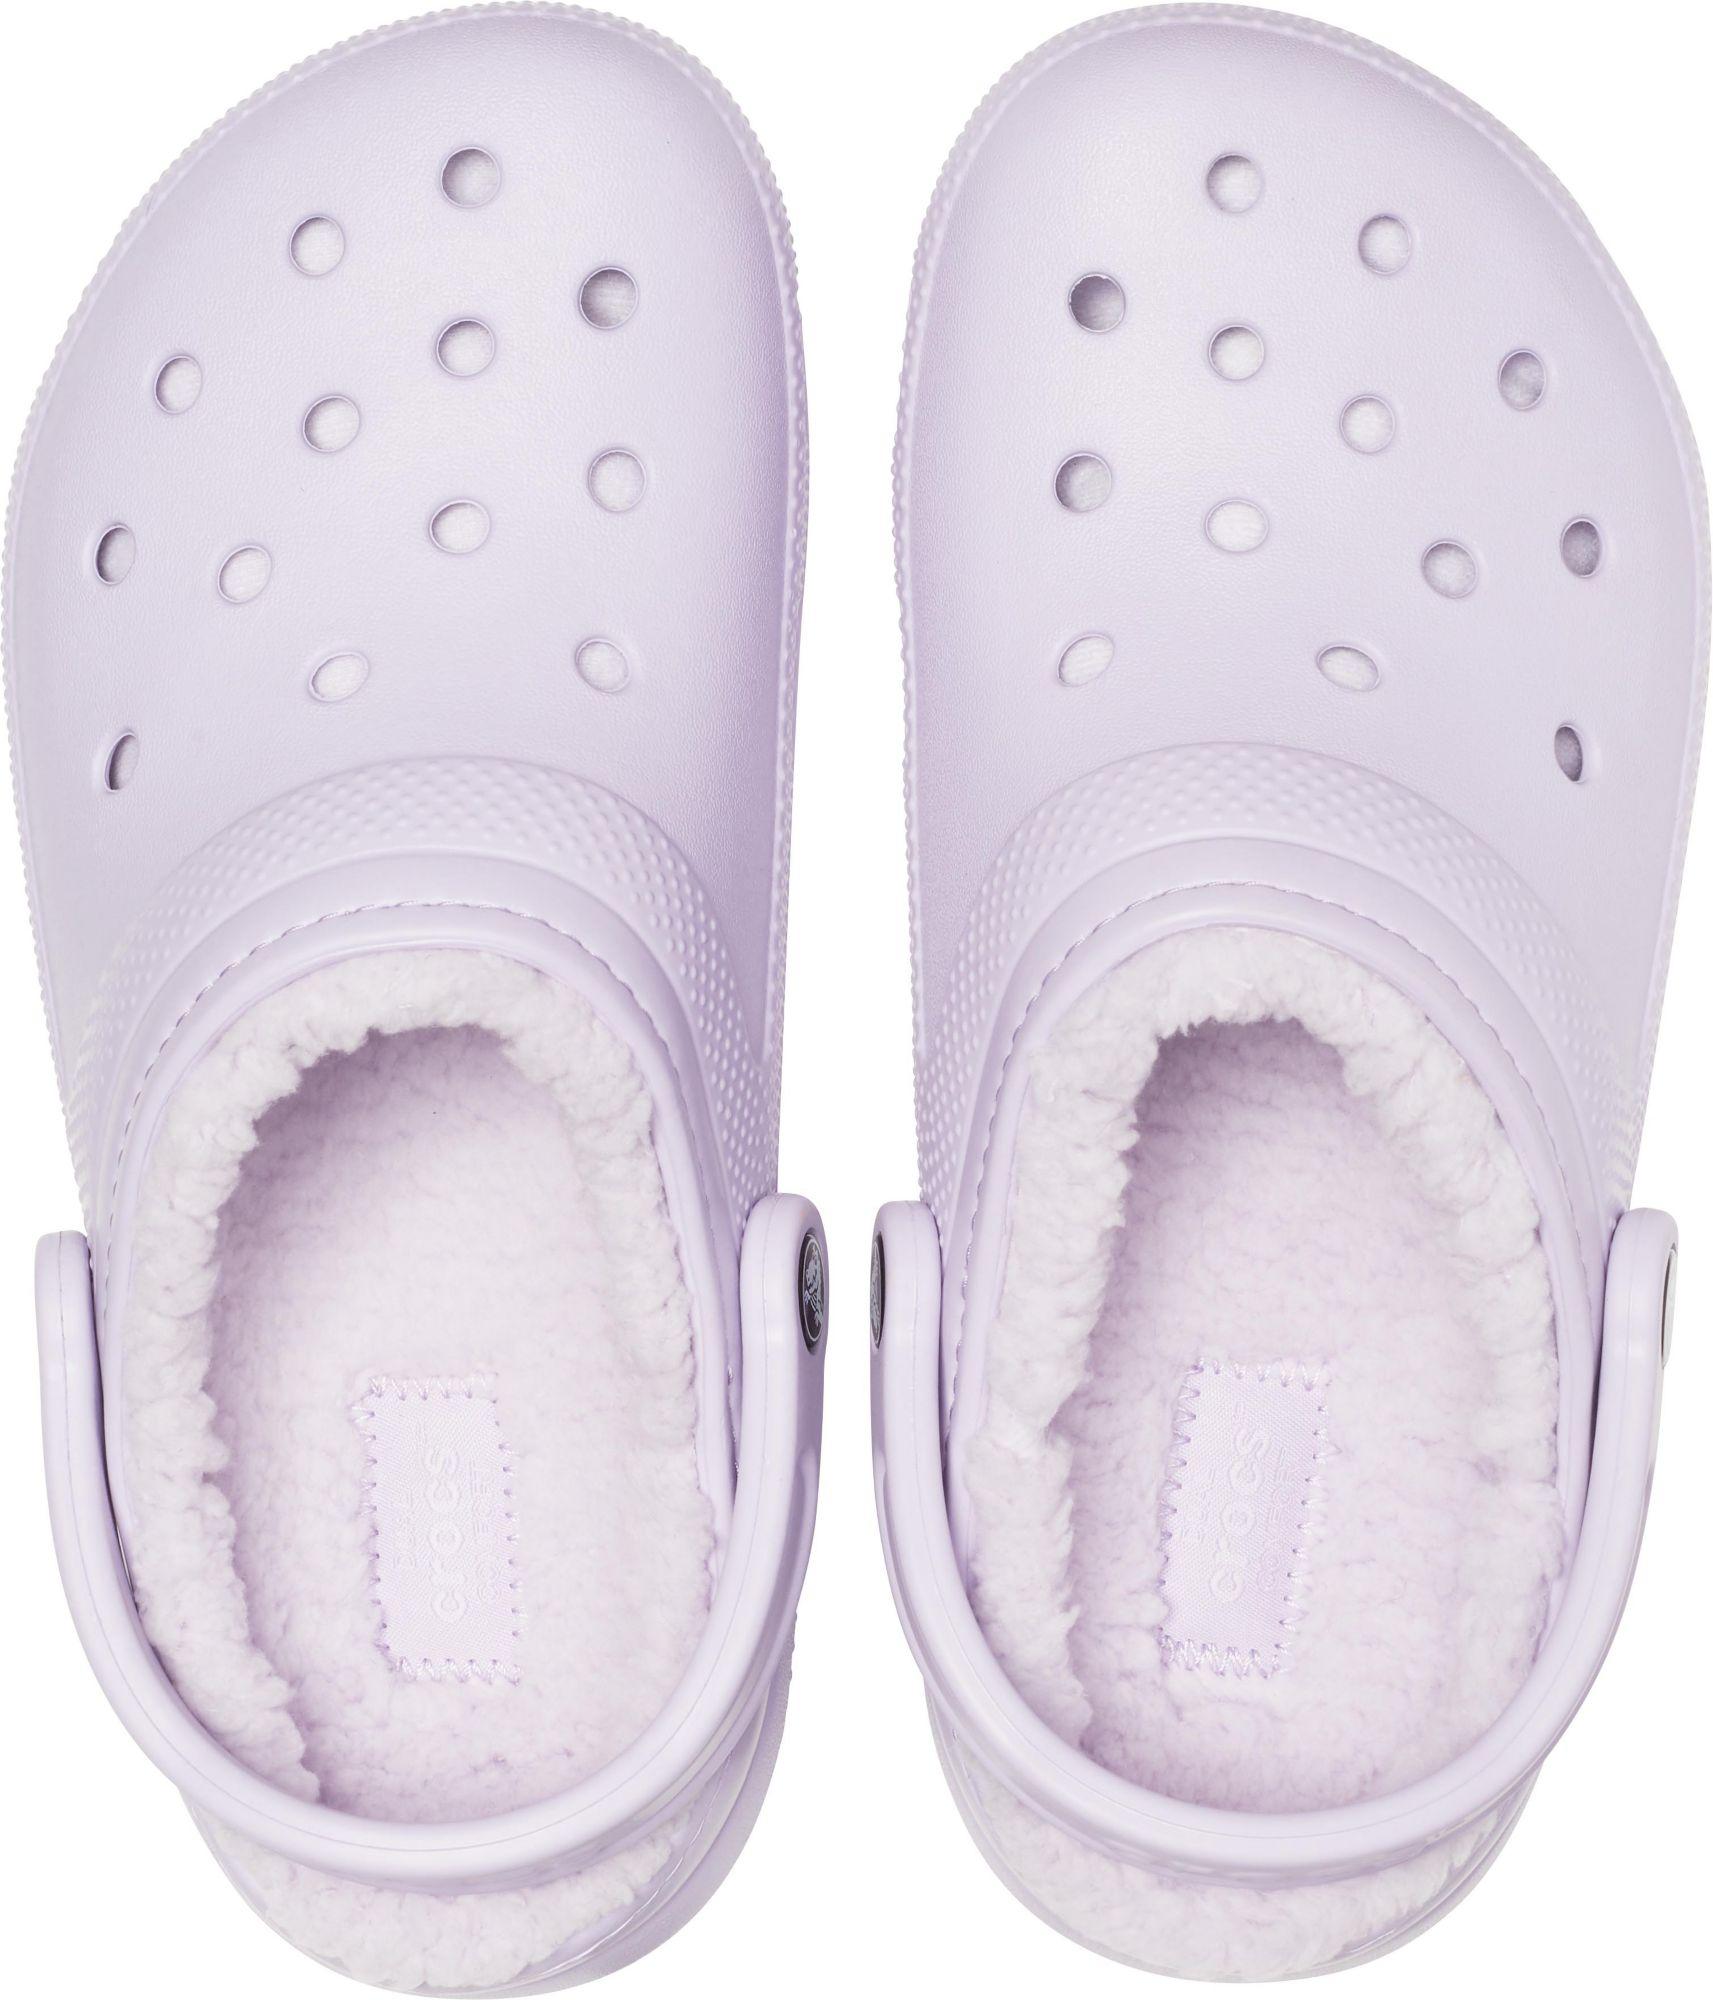 purple fuzzy crocs womens